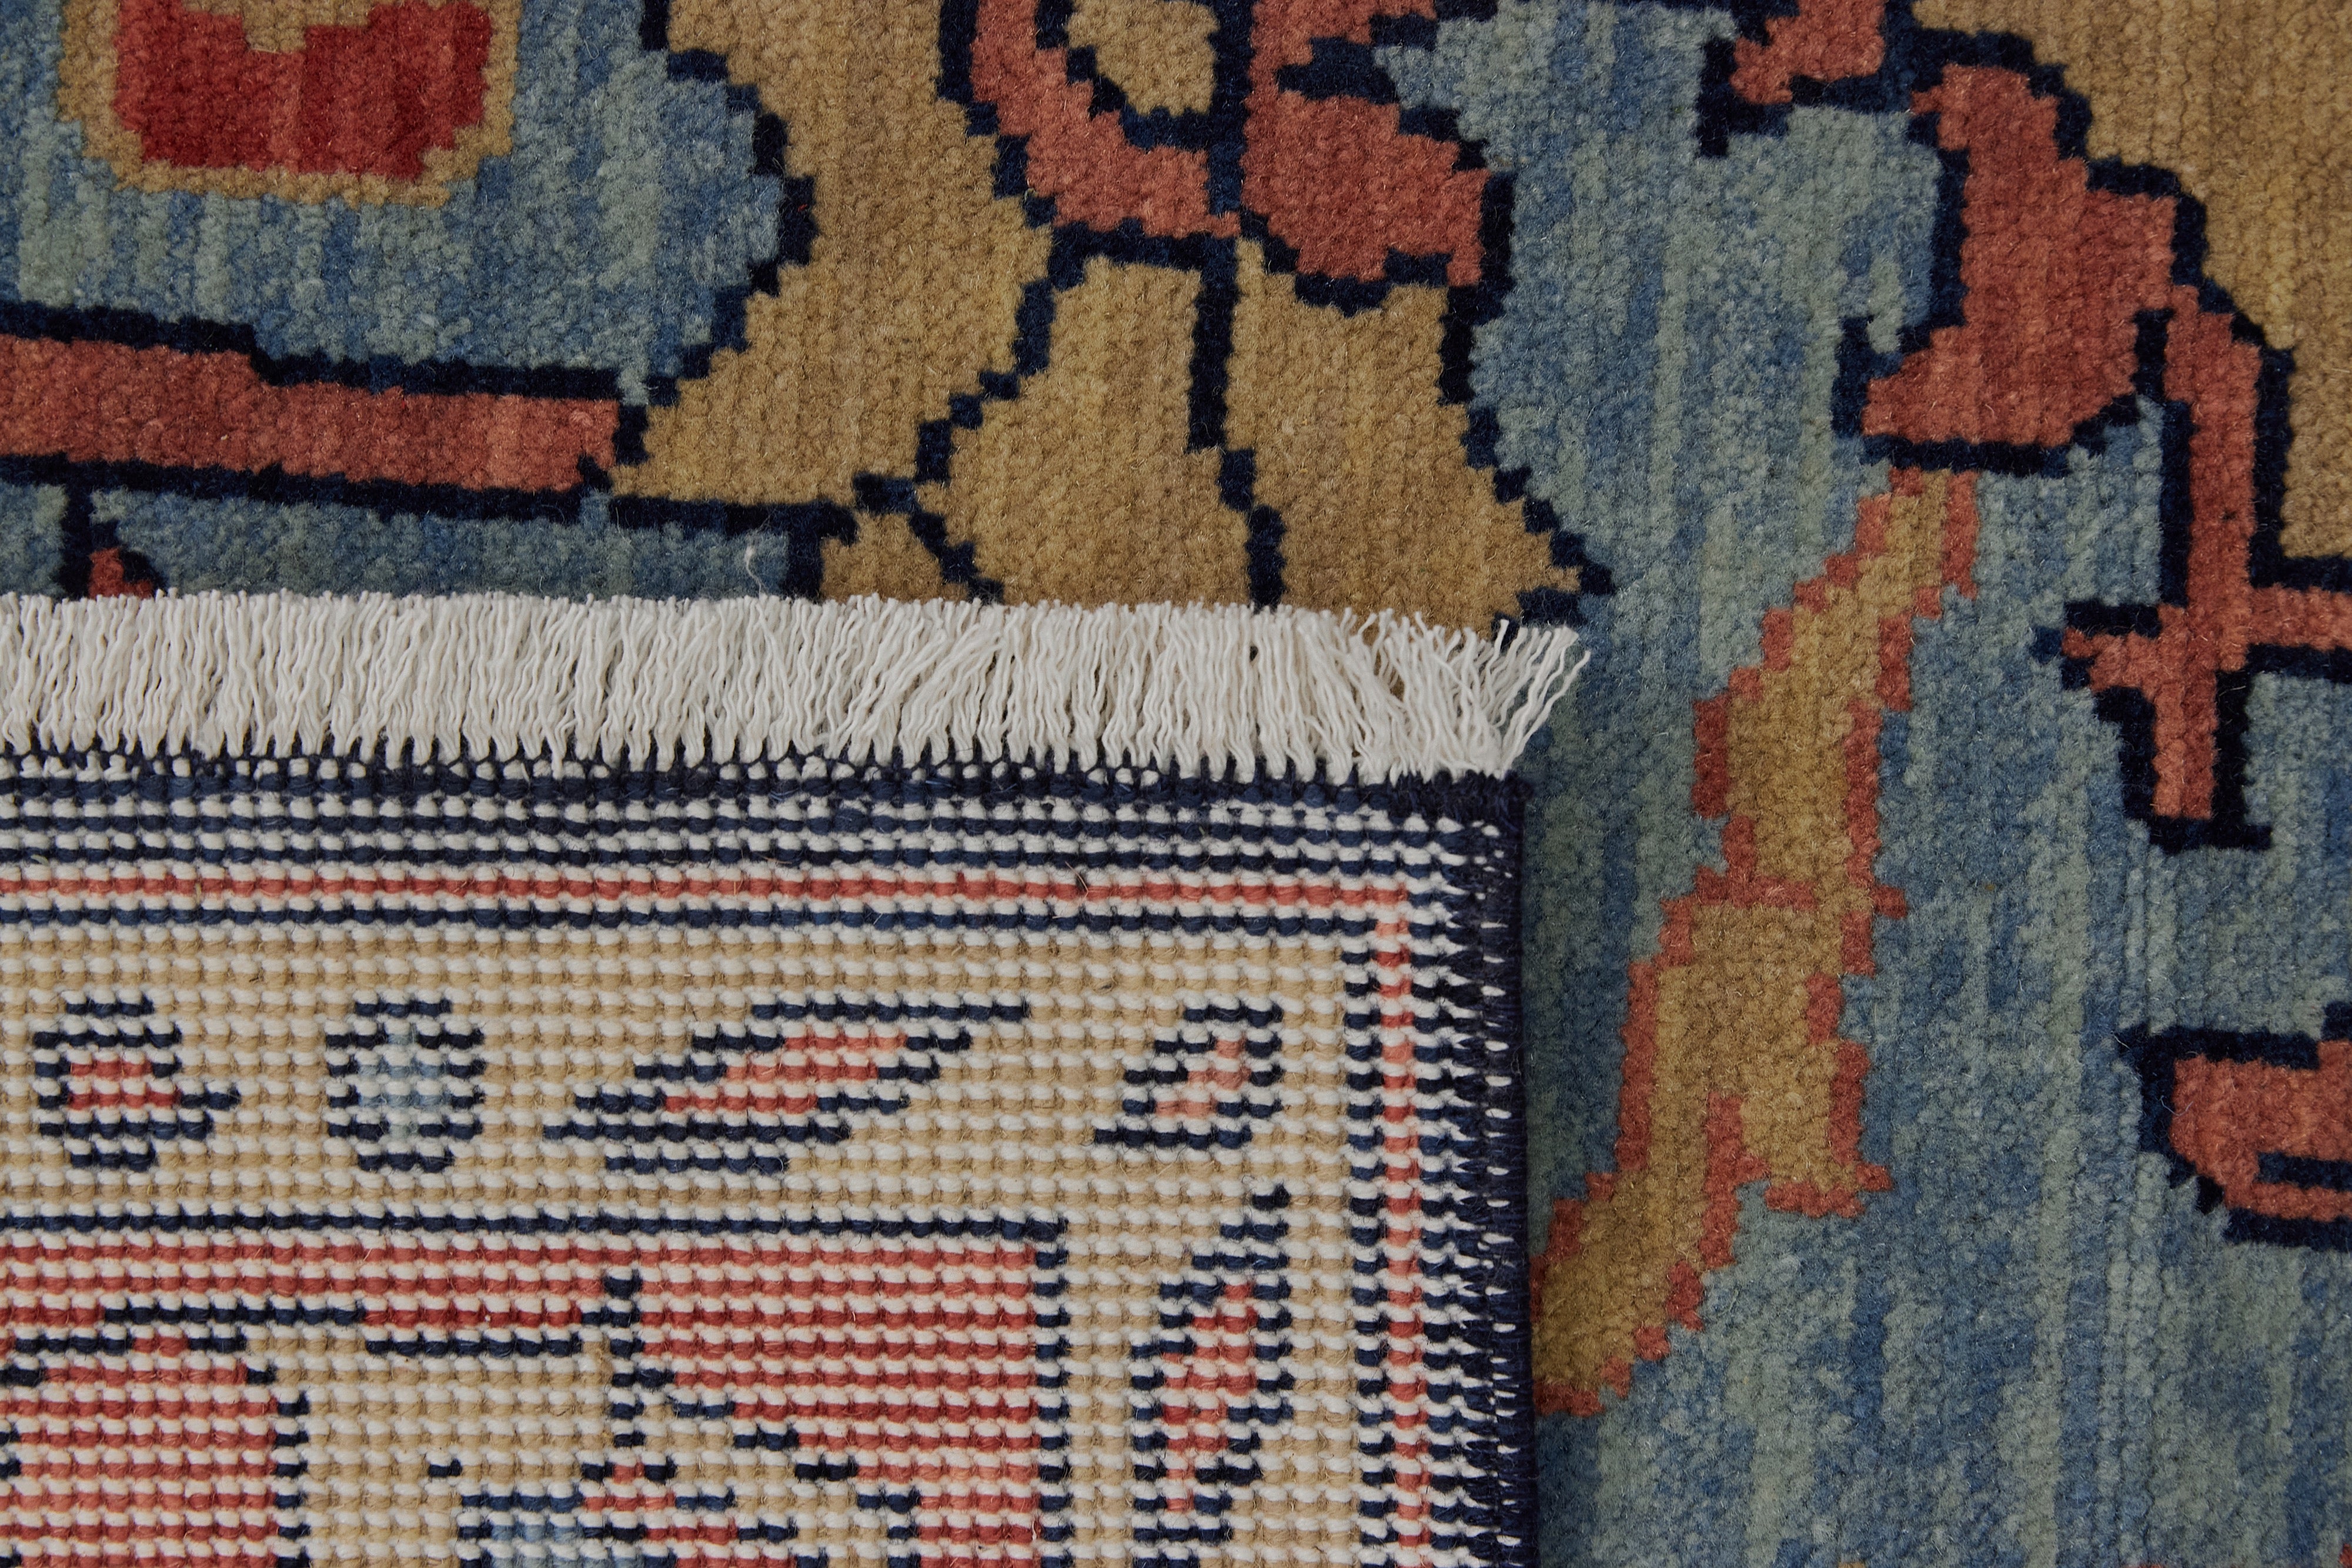 Sophisticated Weaving - Isabella's Expert Turkish Carpet Craft